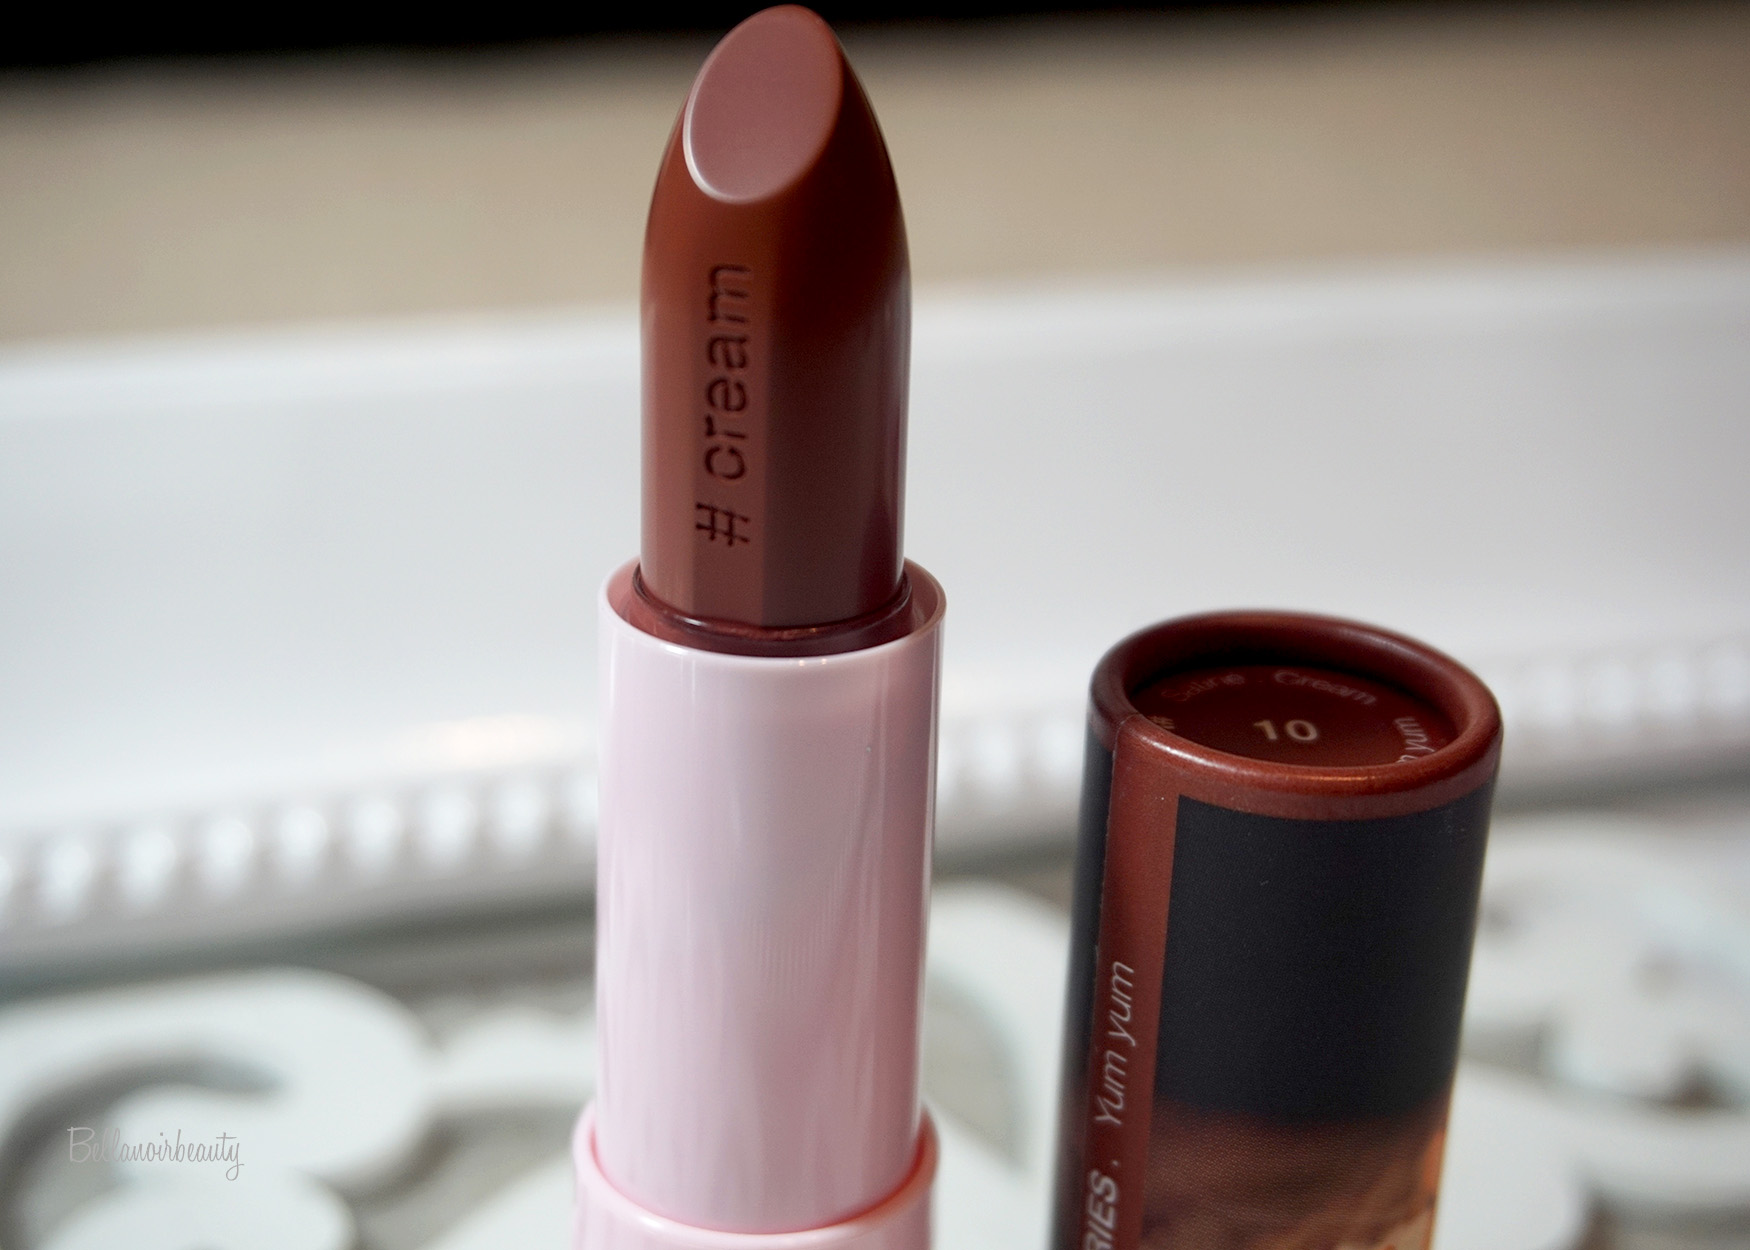 Sephora Lipstories Lipstick | bellanoirbeauty.com